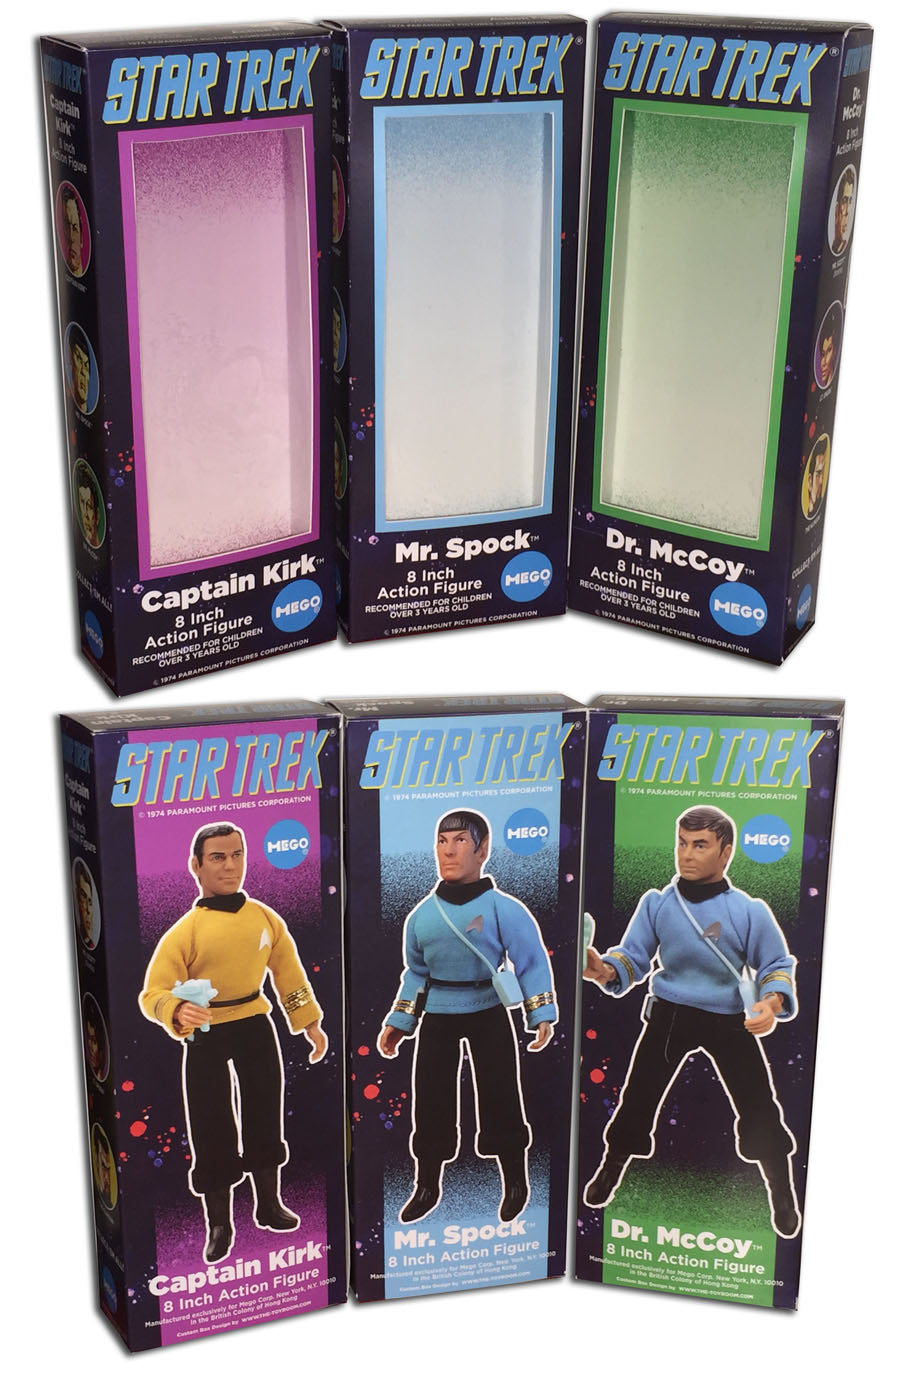 Mego Star Trek Boxes: TOS Original Crew